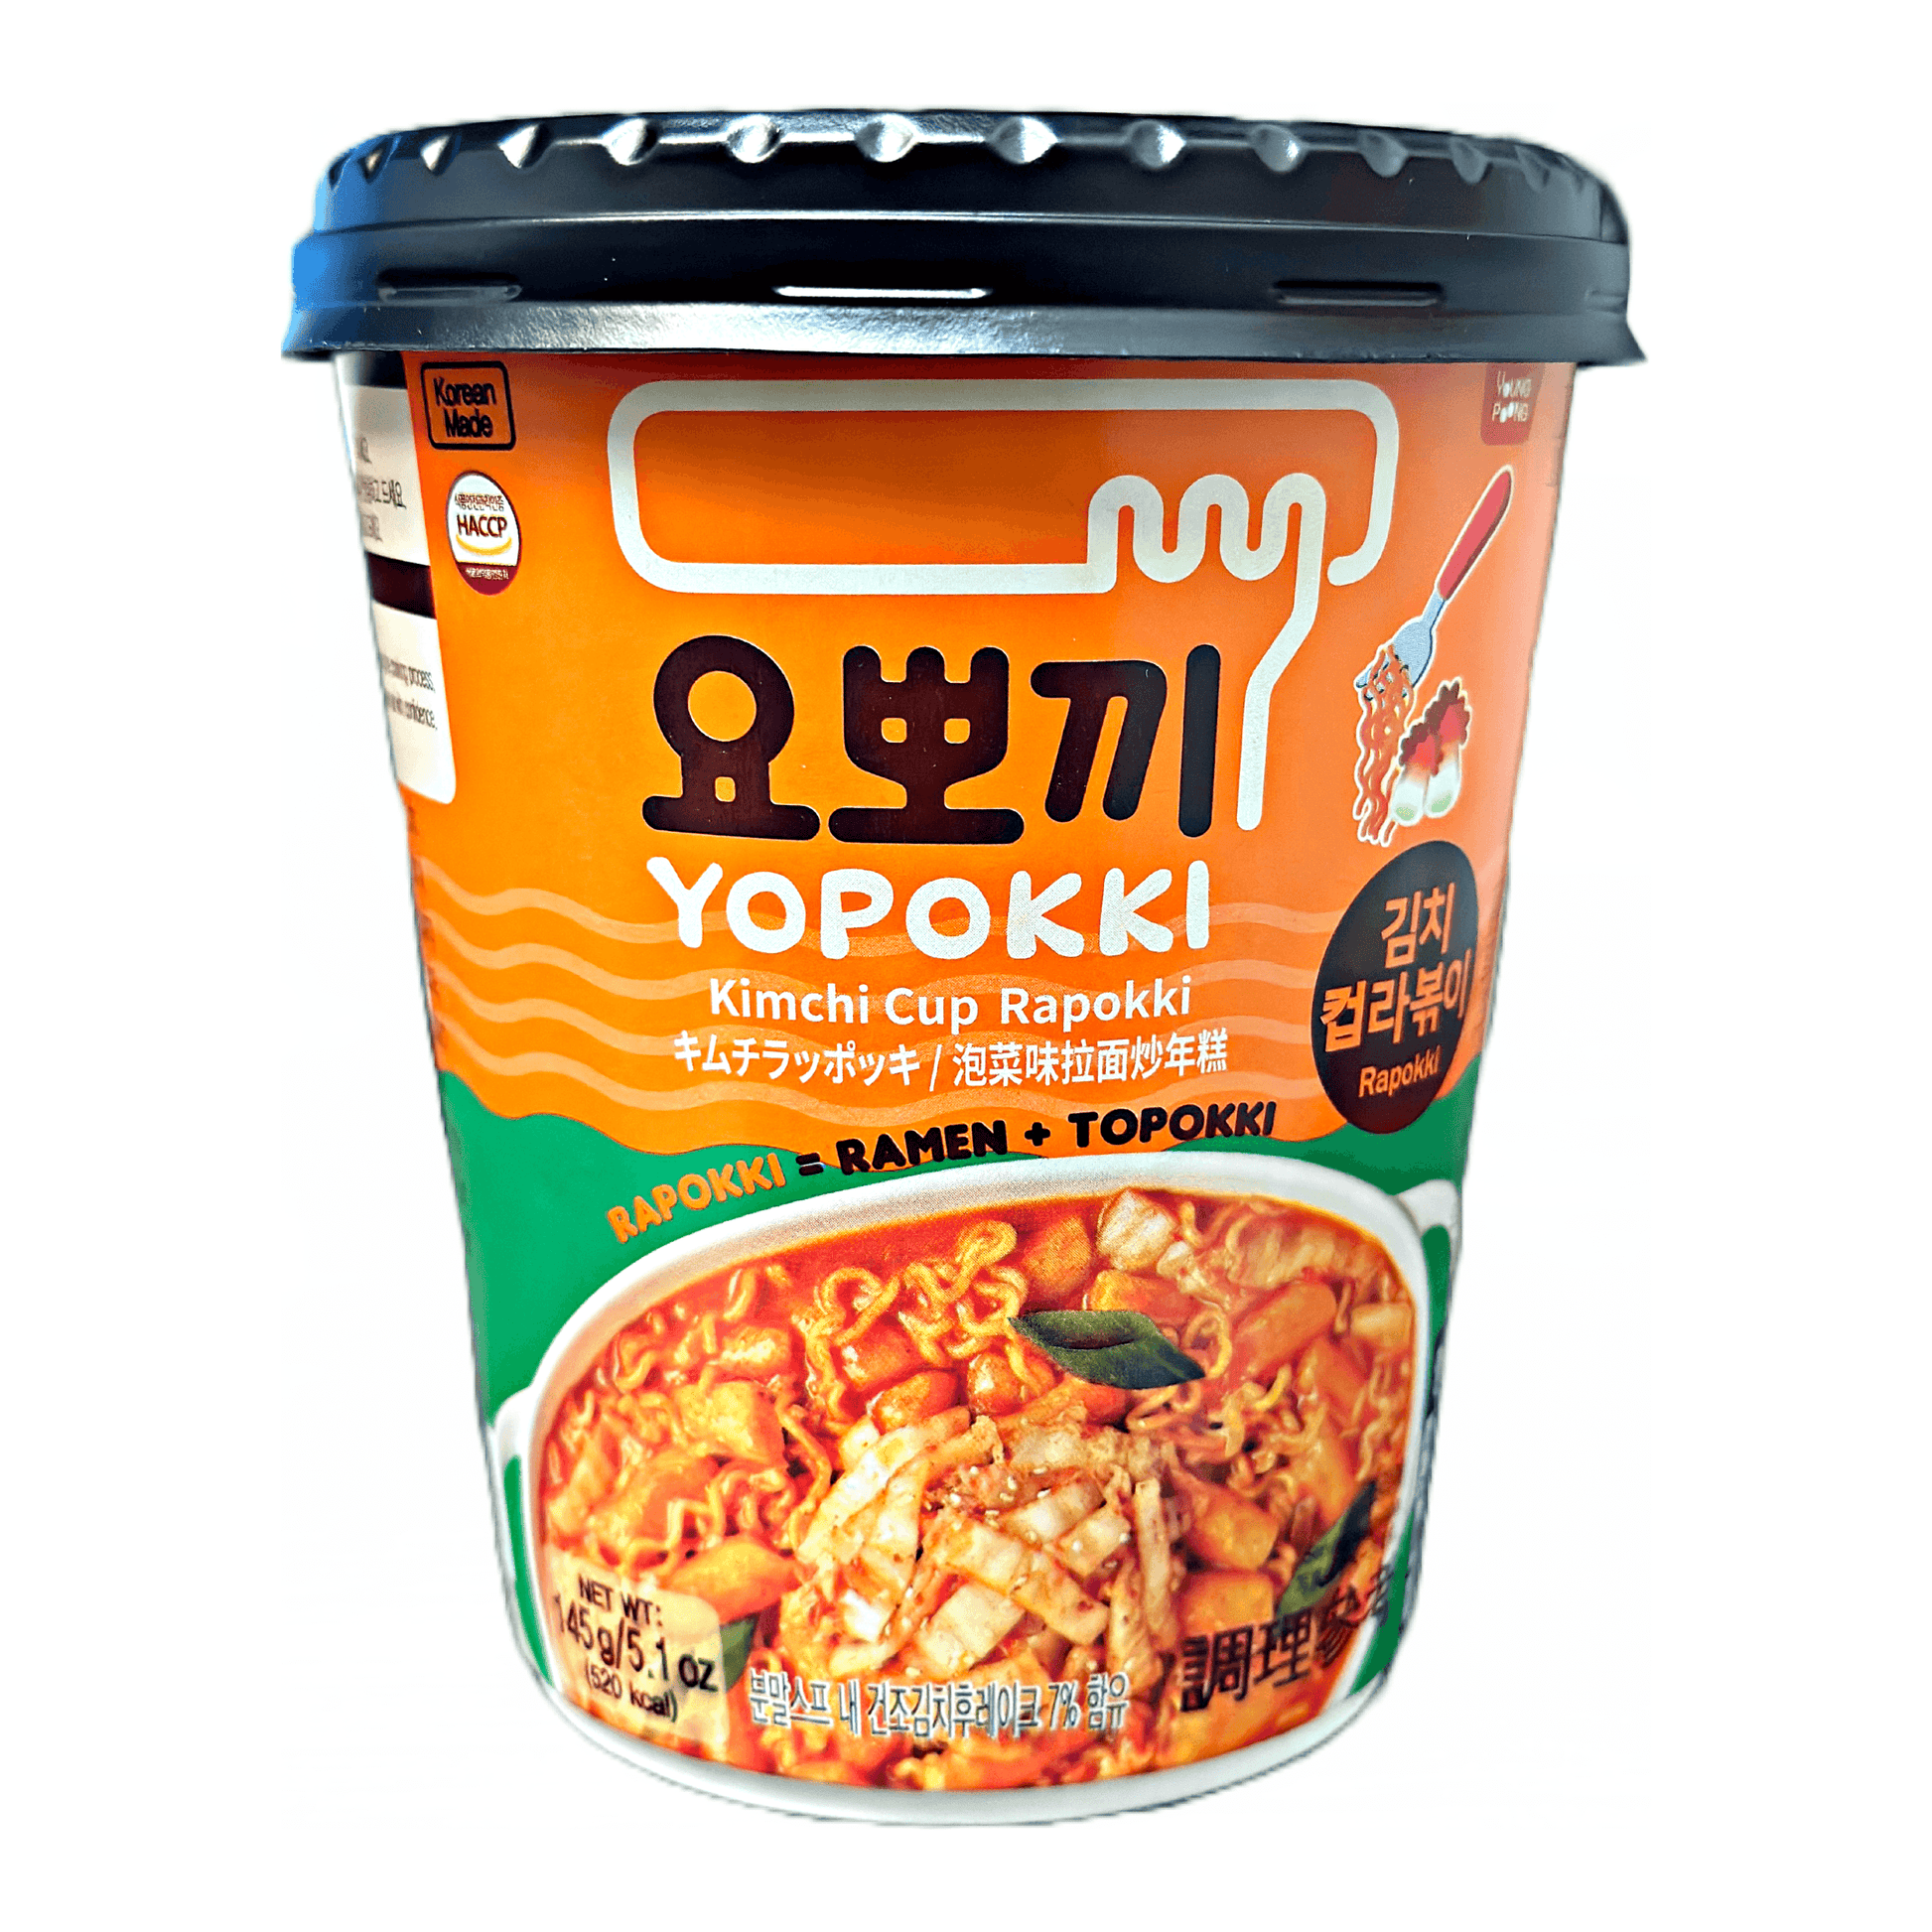 Young Poong Yopokki Kimchi Cup Rapokki 145g - The Snacks Box - Asian Snacks Store - The Snacks Box - Korean Snack - Japanese Snack